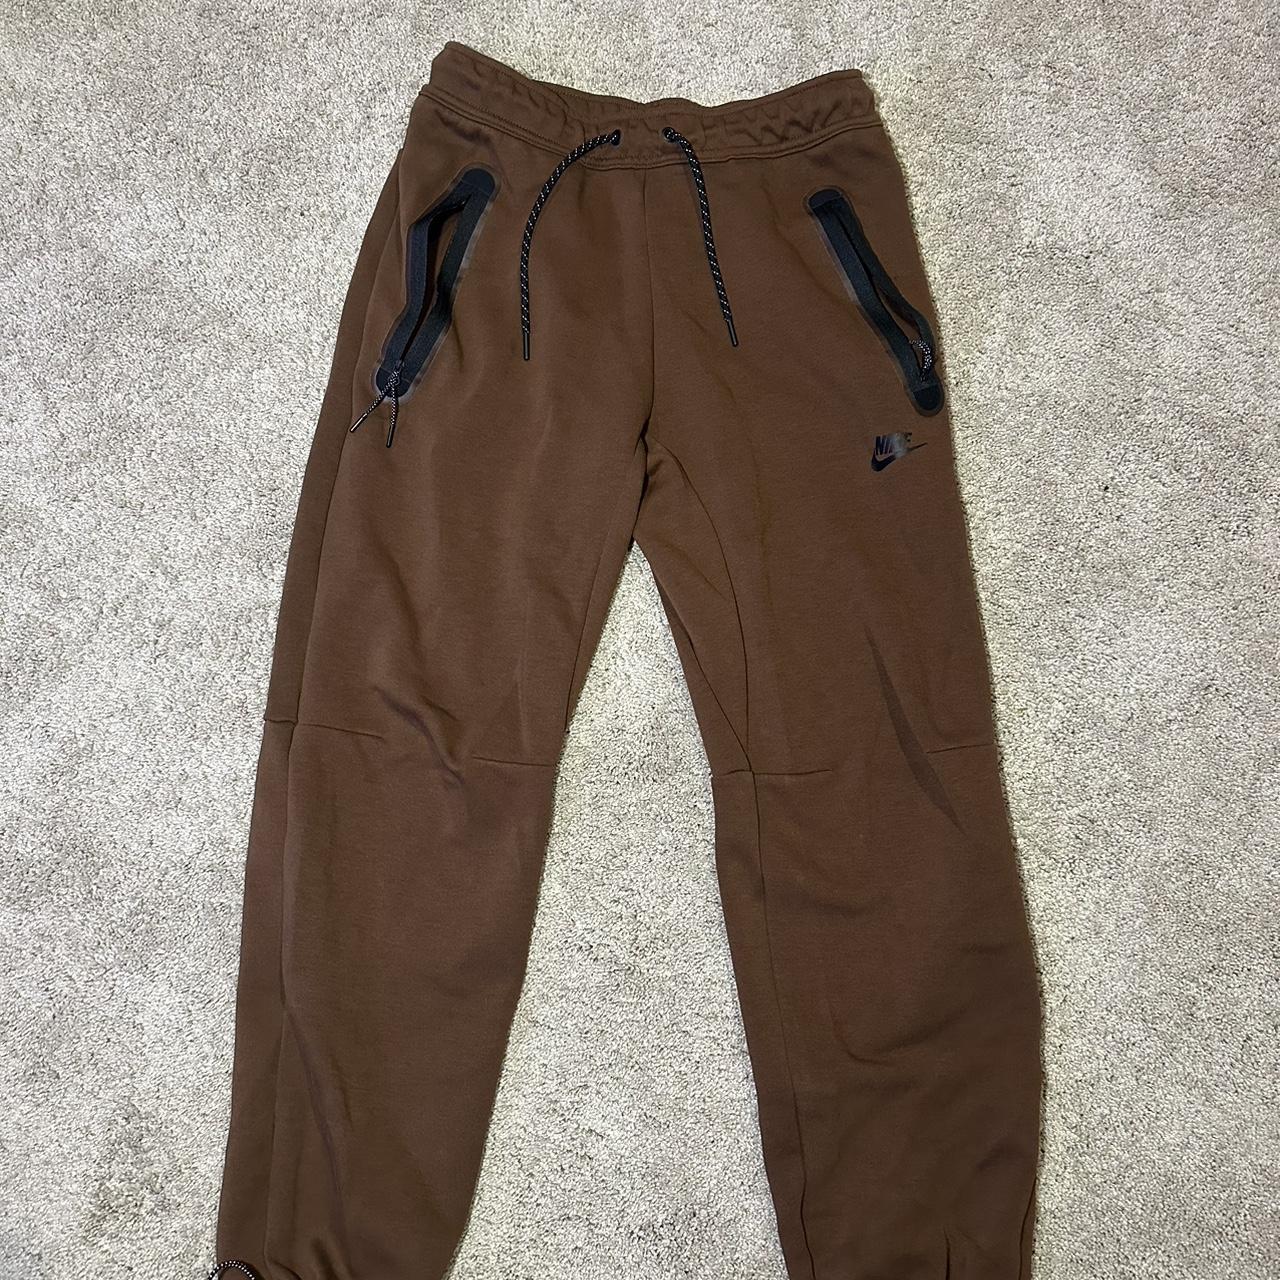 Small brown nike tech pants with zipper pockets.... - Depop